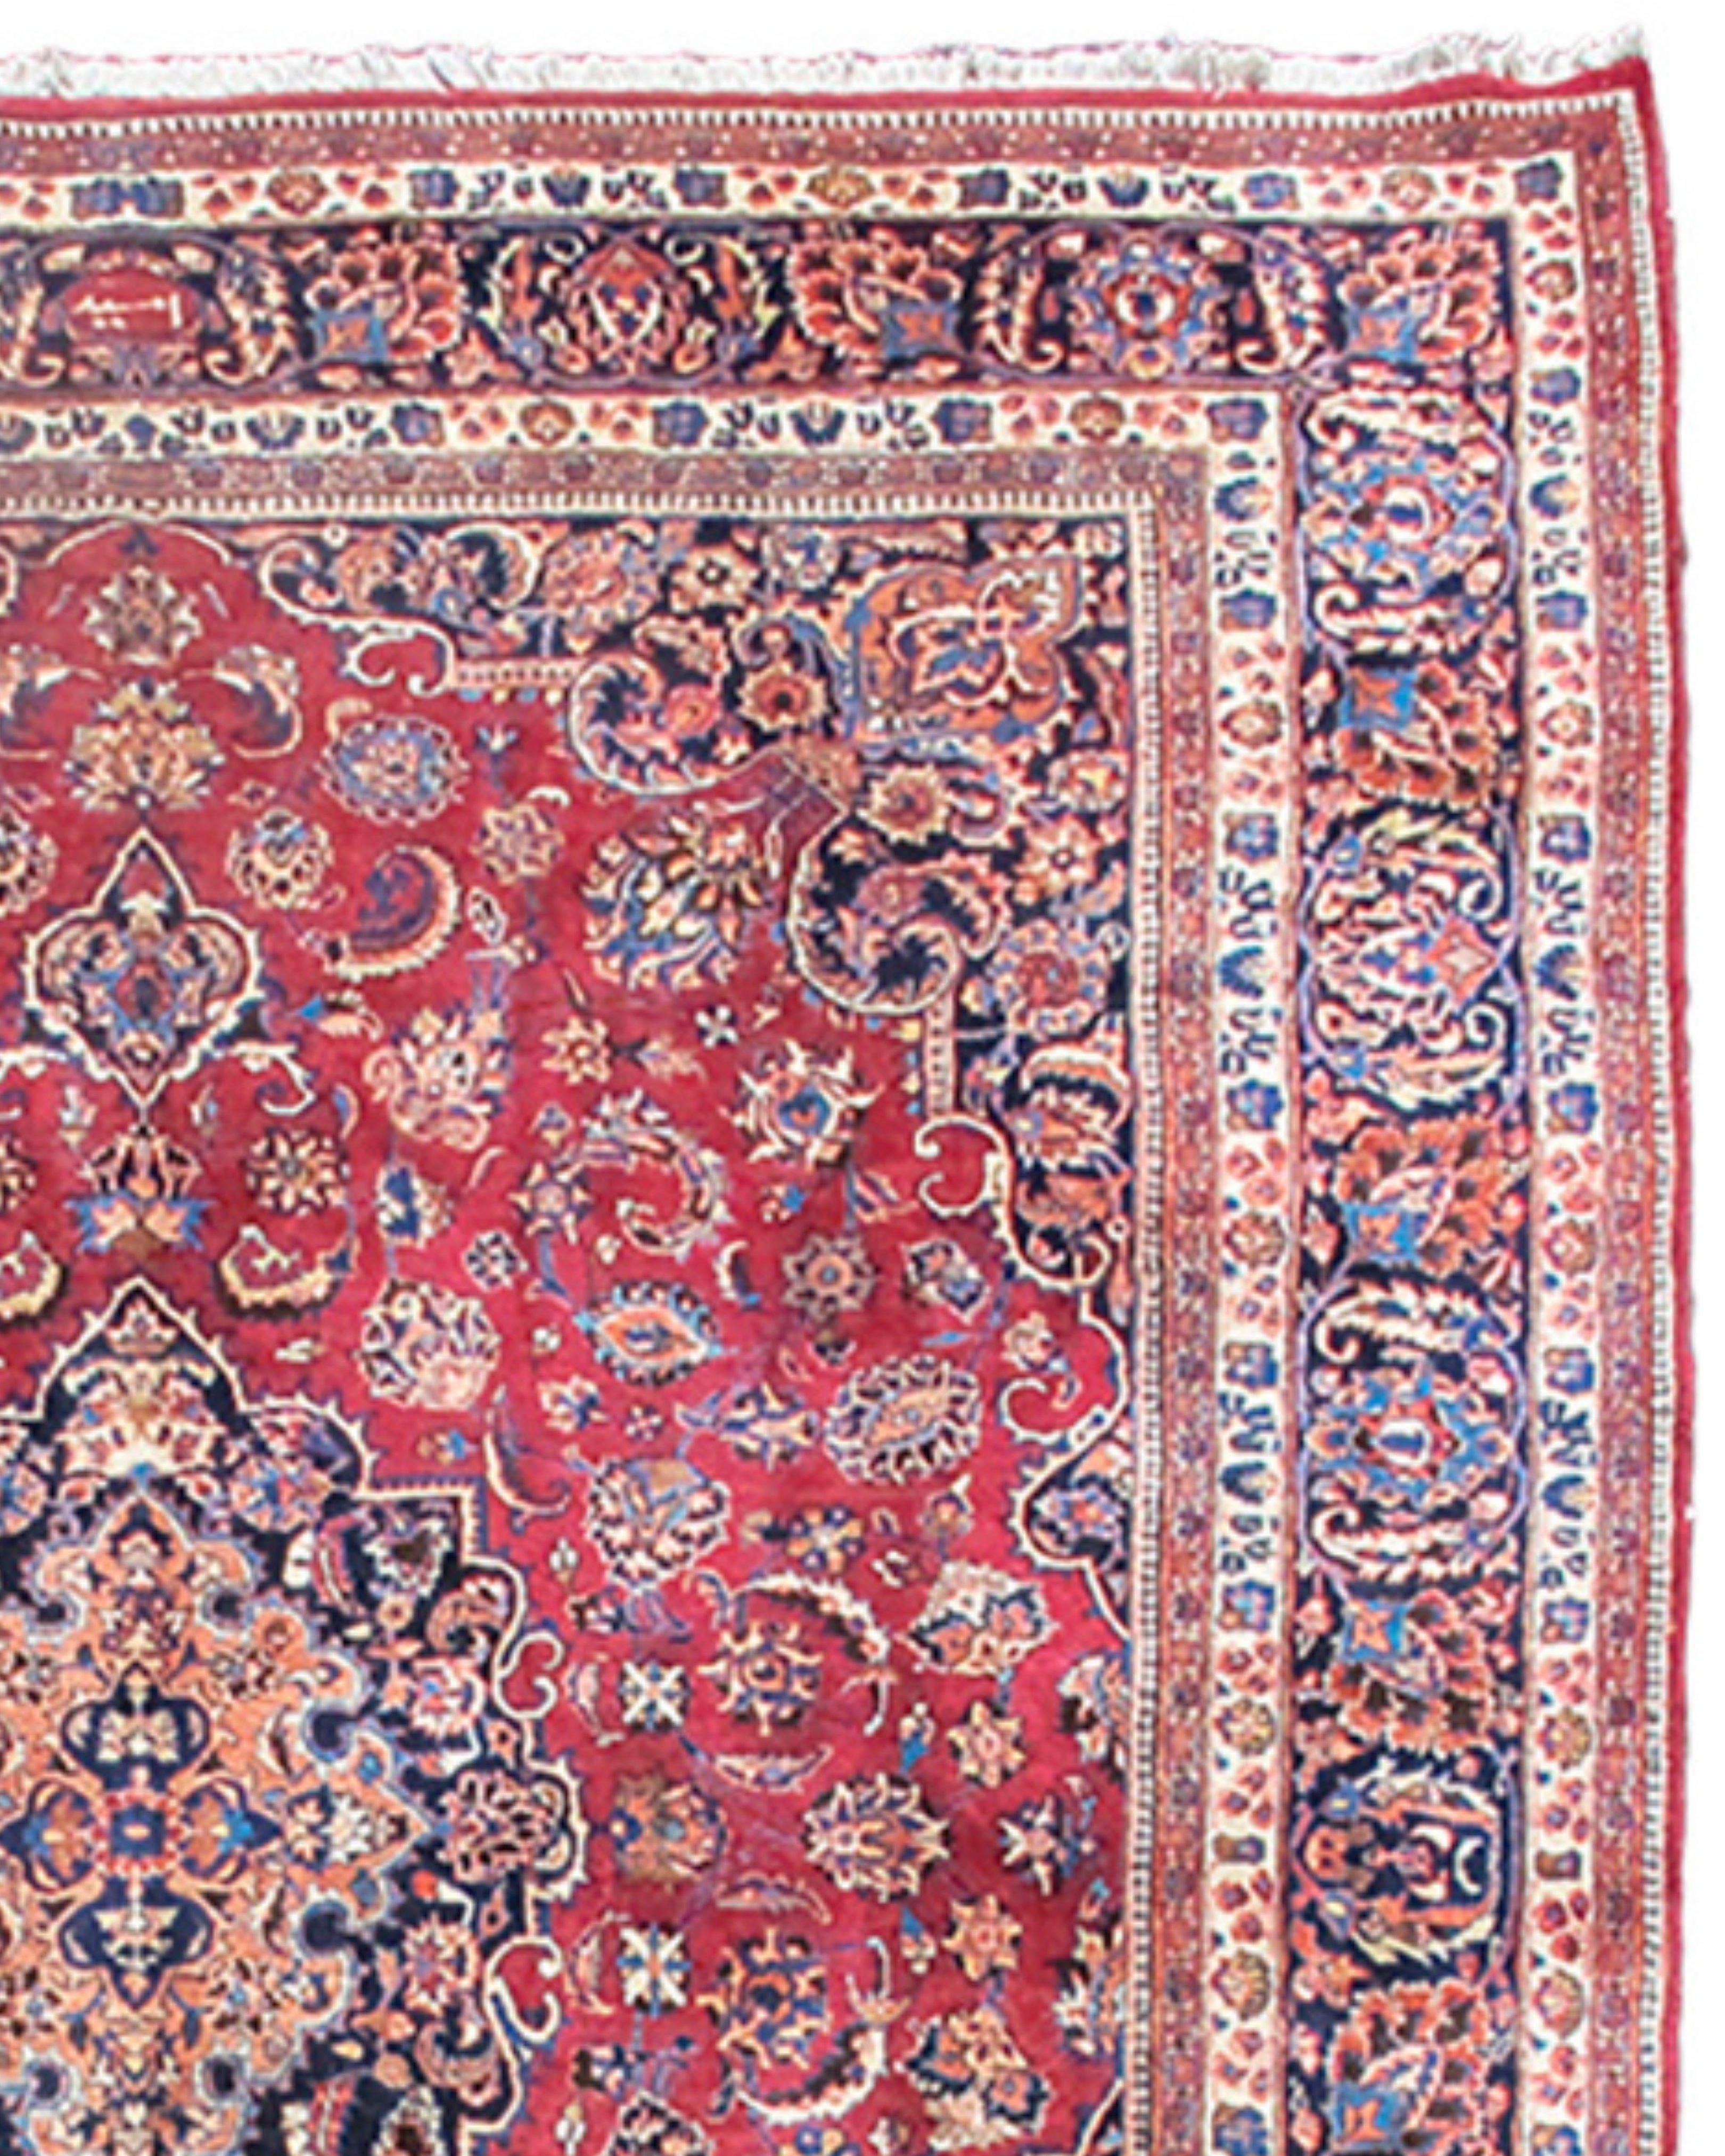 Antique Persian Mashad Rug, c. 1900

Original, possibly unused condition.

Additional Information:
Dimensions: 9'10